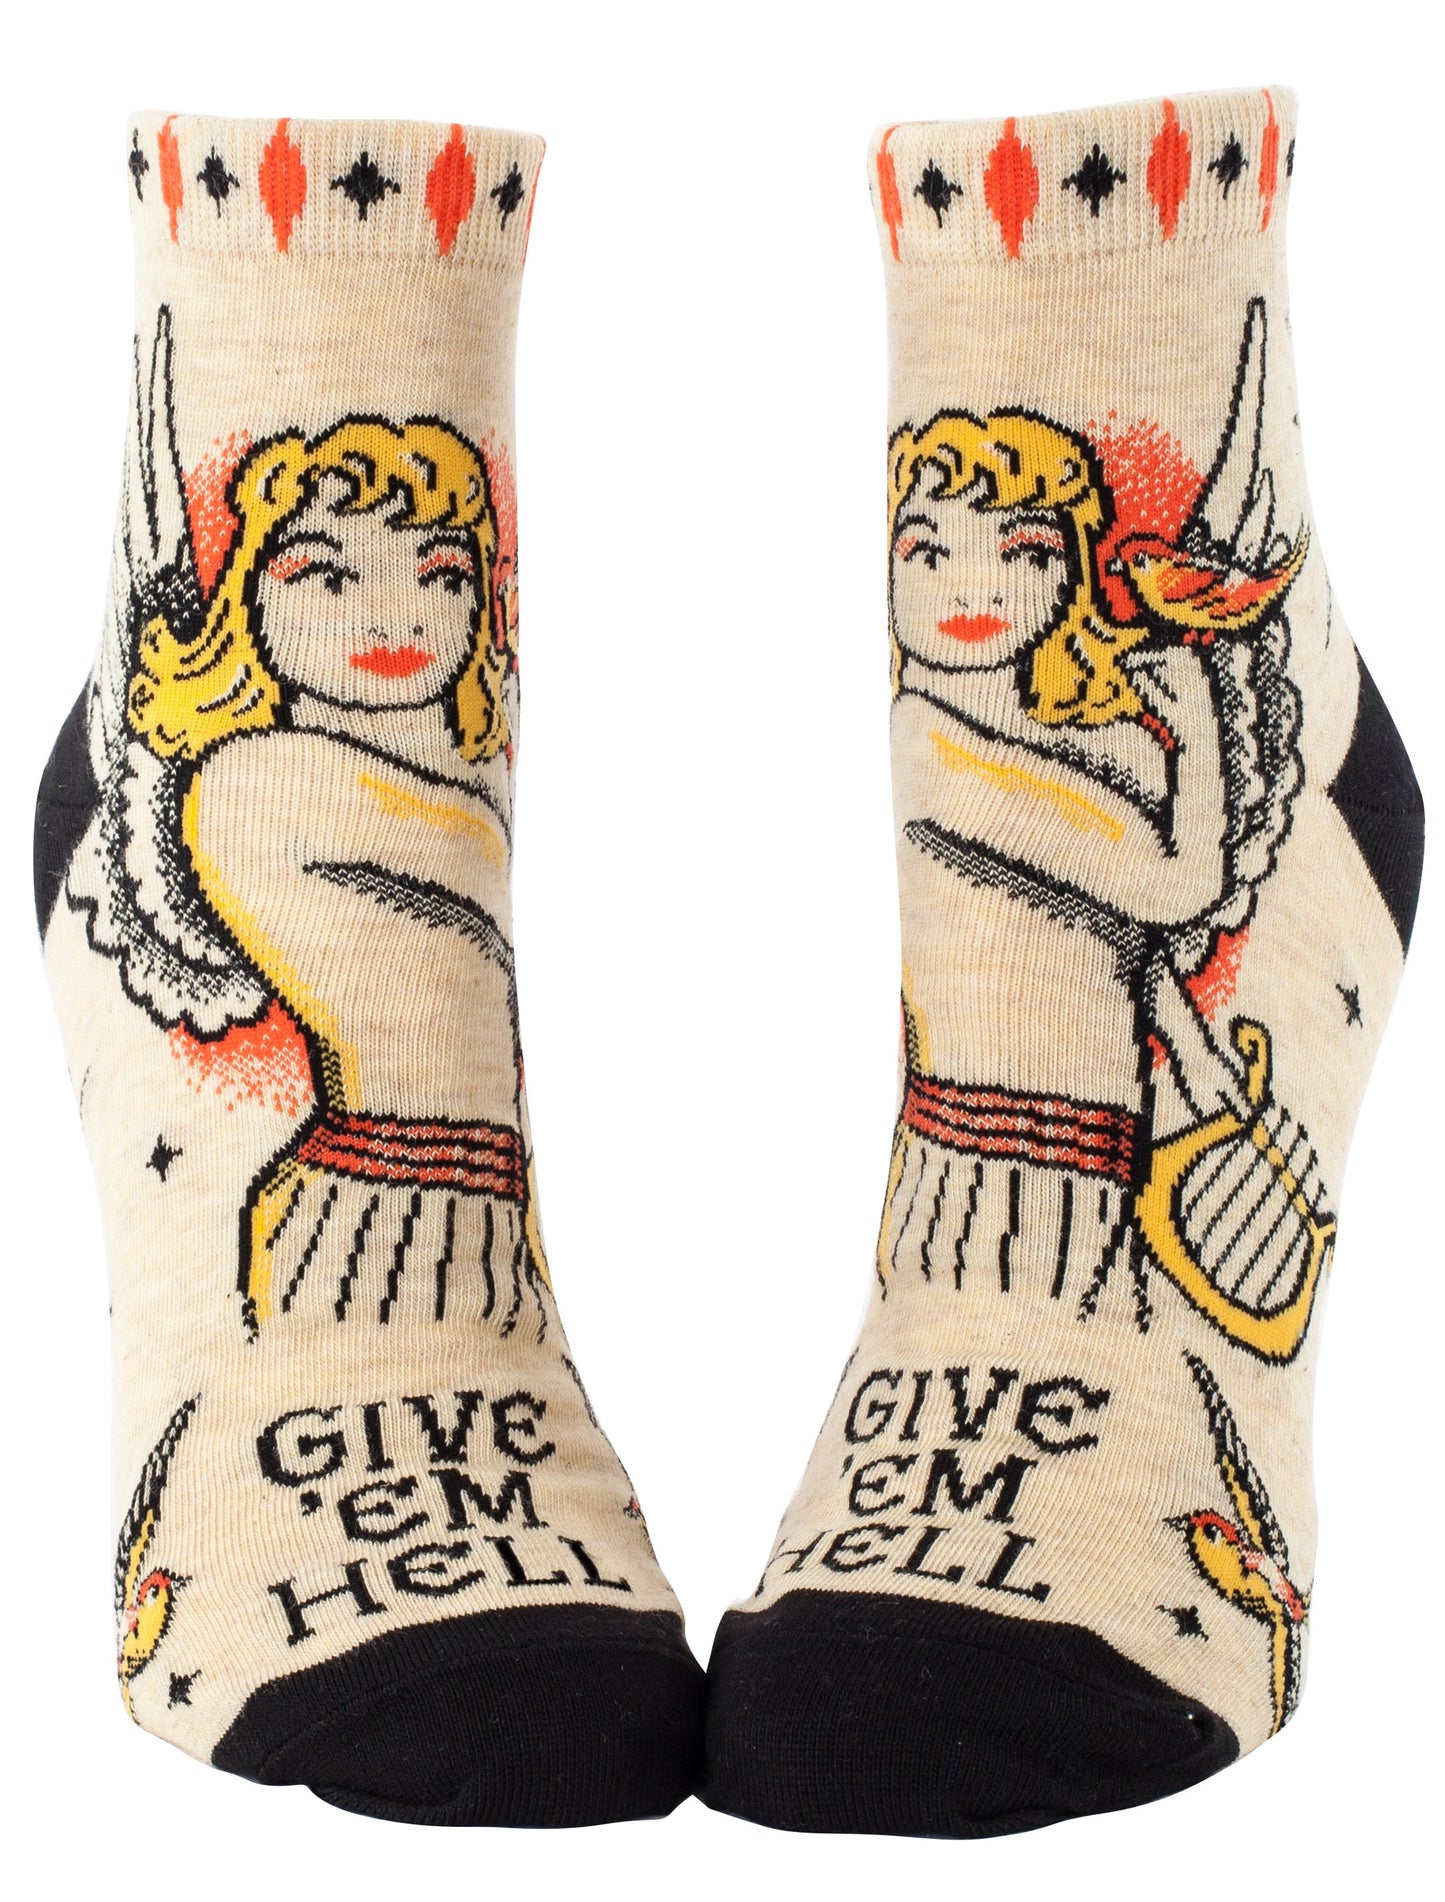 Blue Q - Women's Ankle Socks - Give 'em Hell